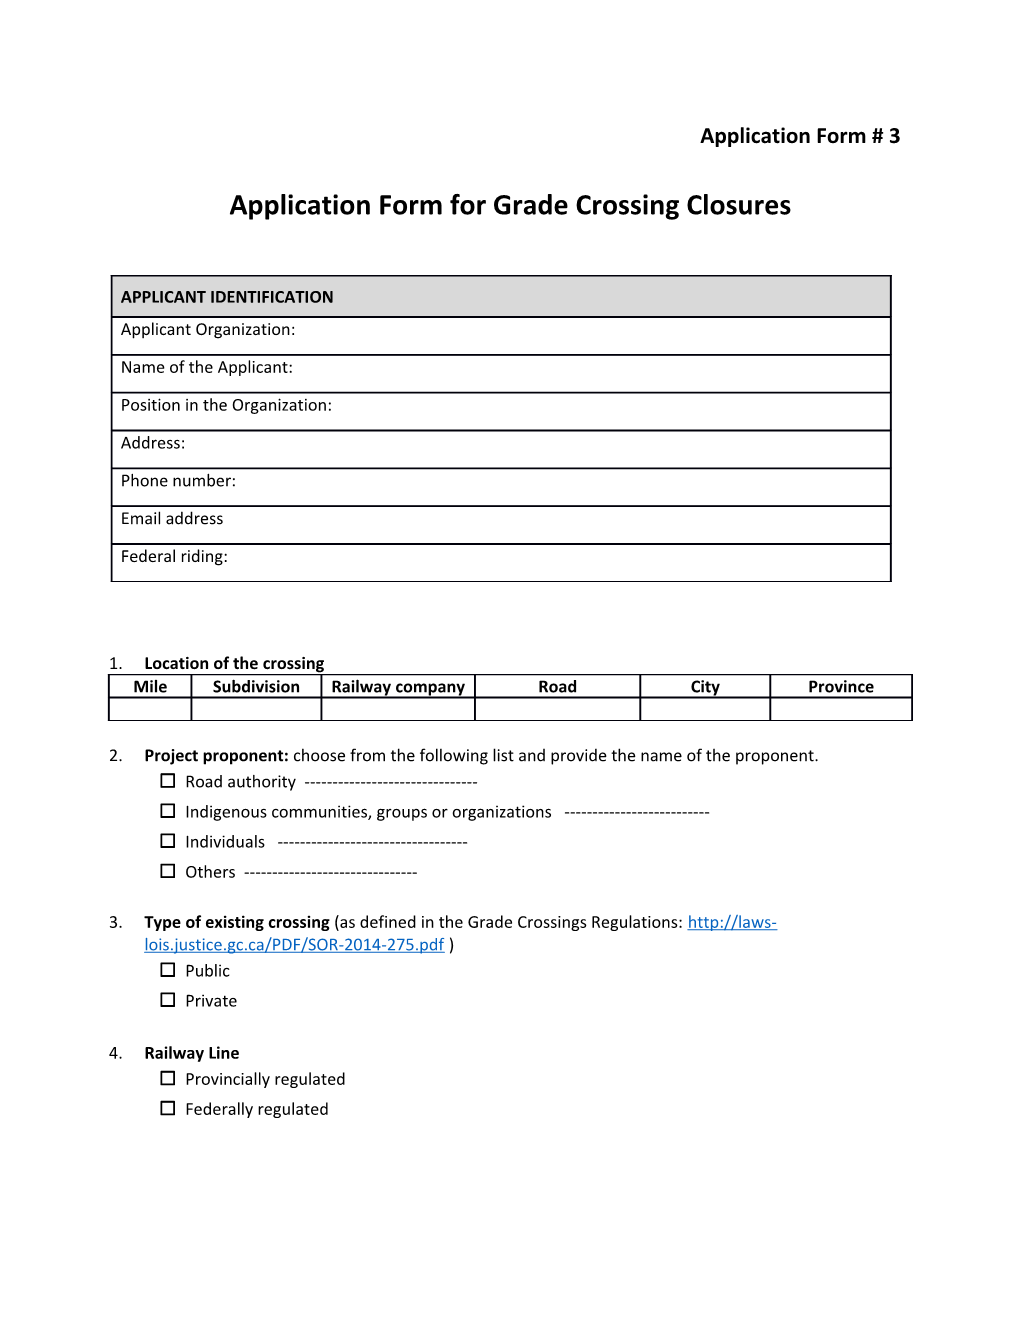 Application Form for Grade Crossing Closures